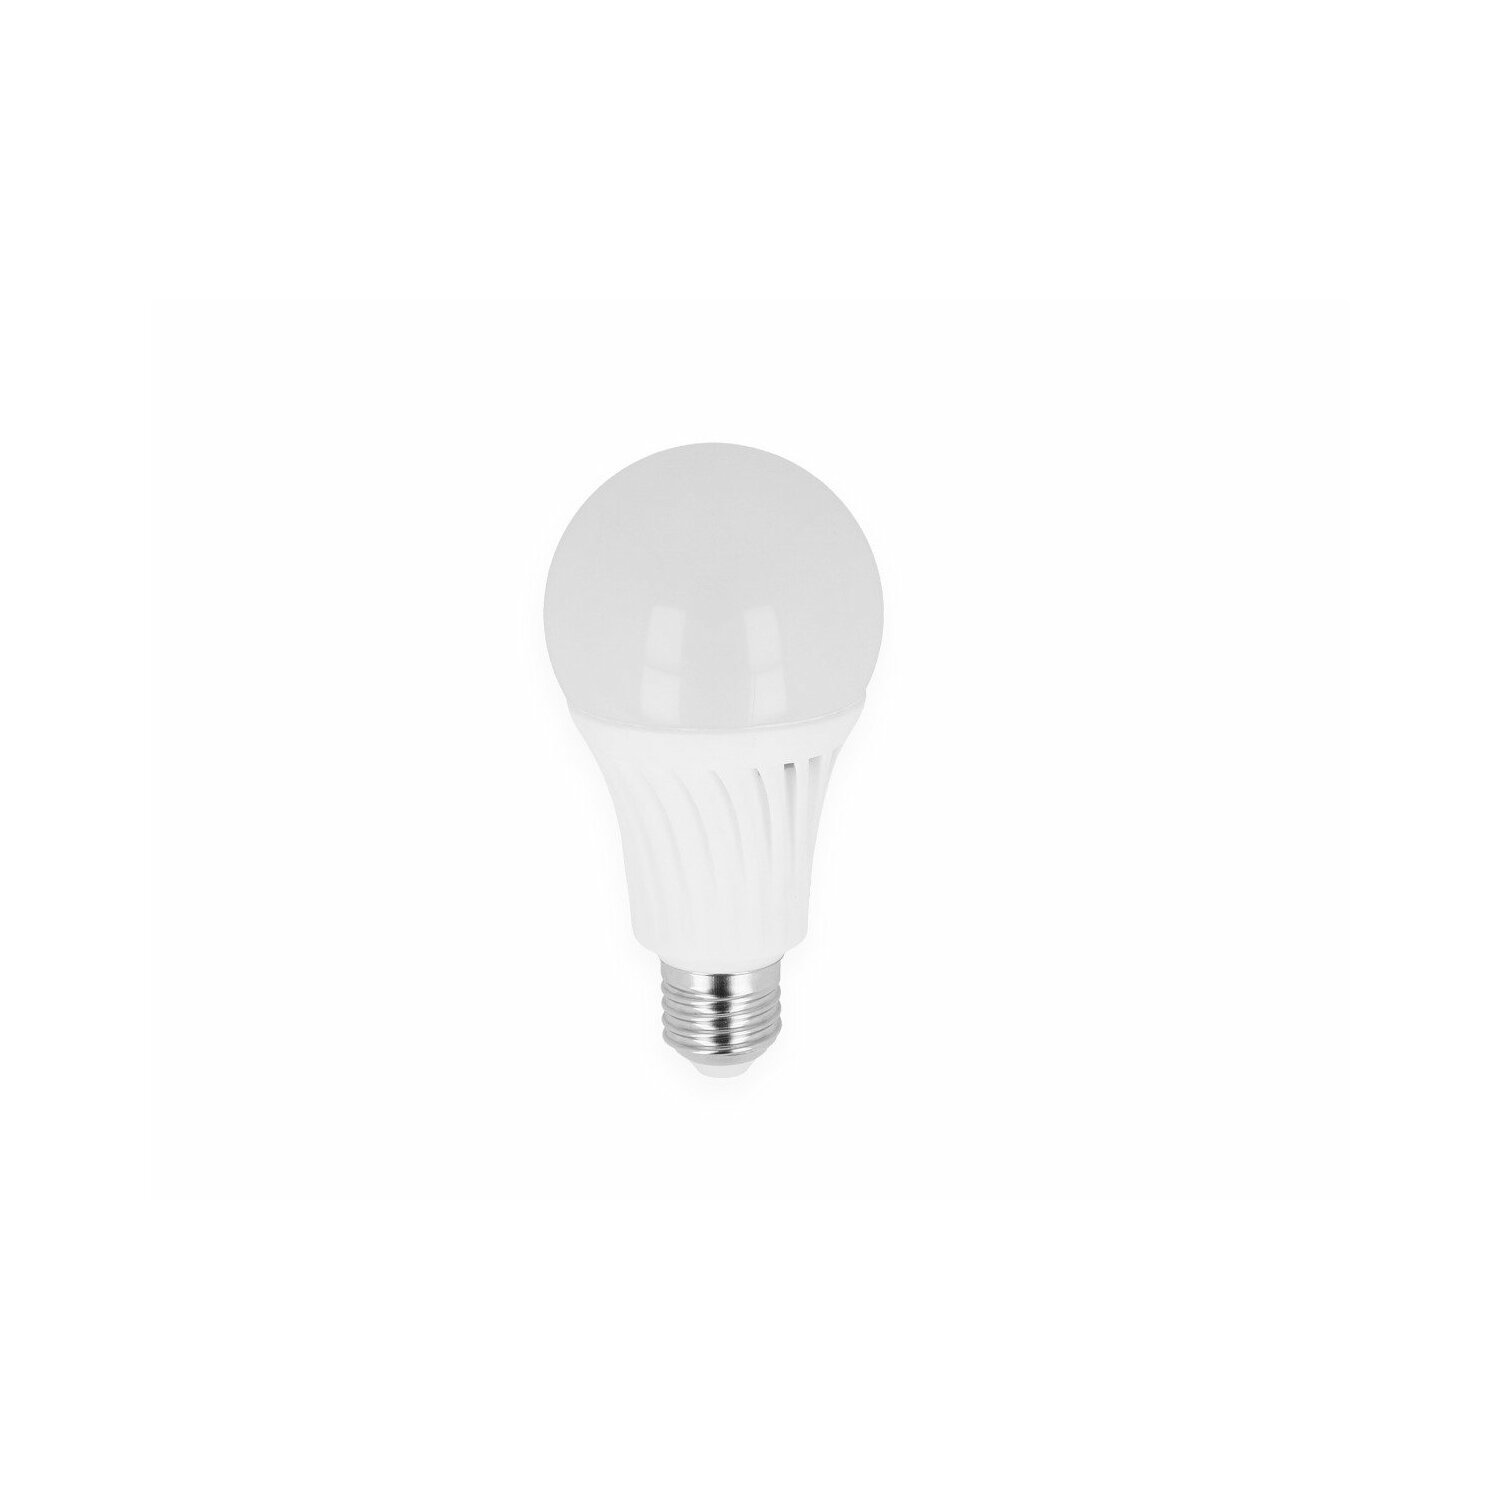 LED LINE 2x E27 18W Warmweiß lm 1800 LED Ceramic Leuchtmittel LED